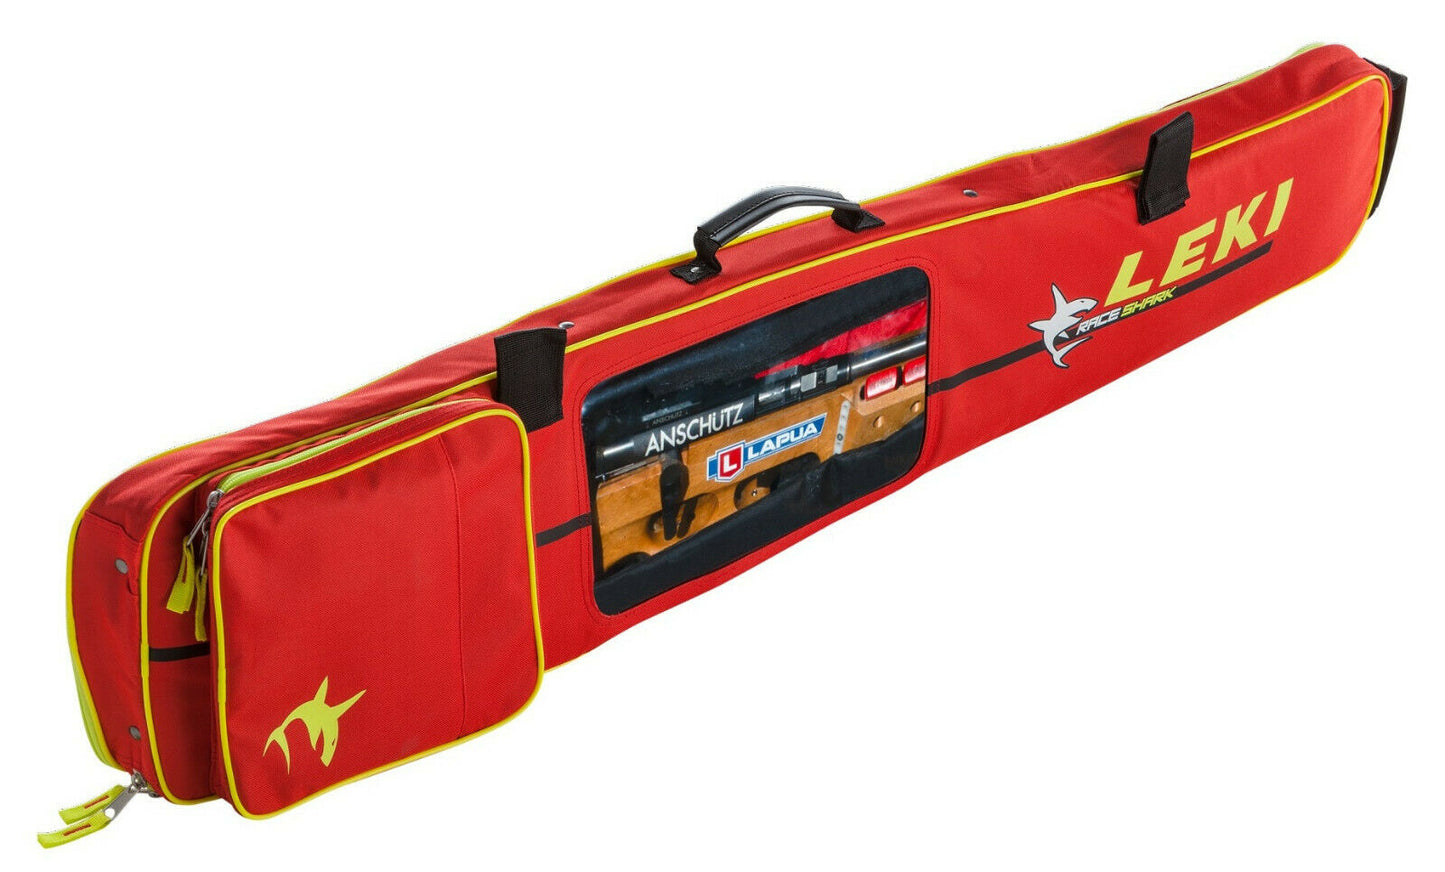 Leki Rifle Bag - Biathlon Gewehrtasche im Racing Design